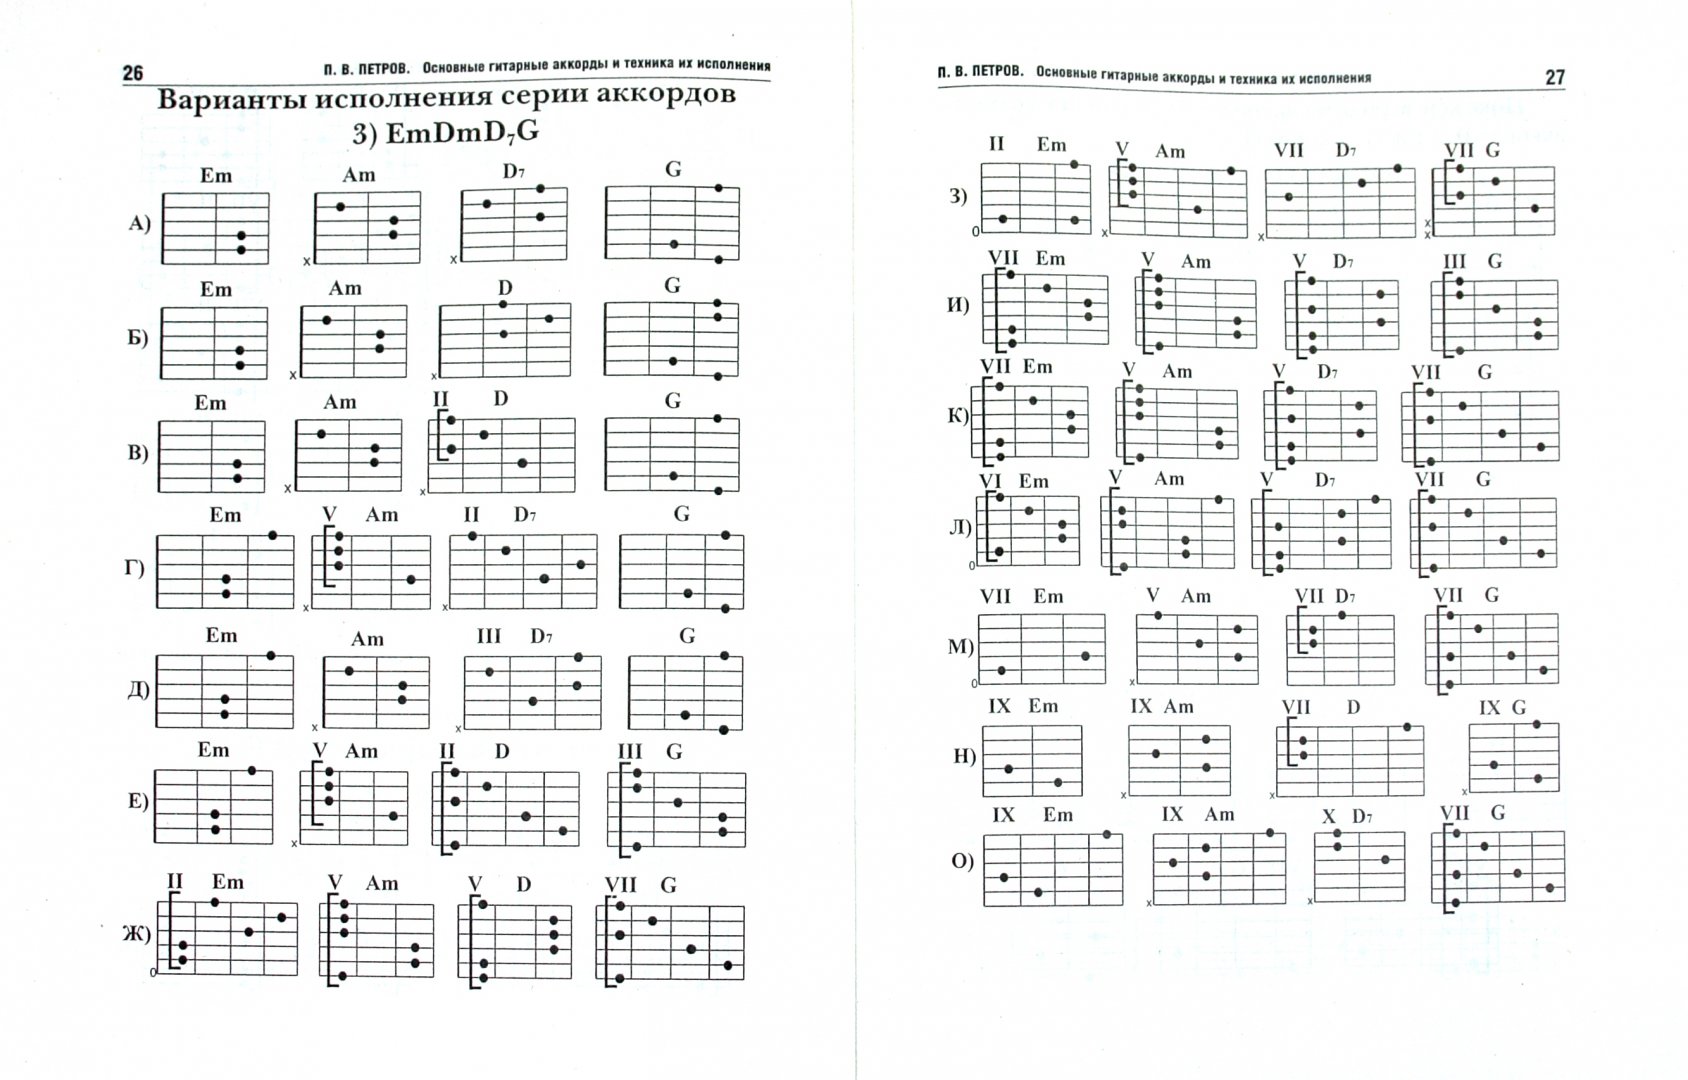 Аккорды для гитары таблица для начинающих. Таблица аккордов для гитары 6 струн для начинающих. Гитарные аккорды таблица для начинающих. Аккорды на 6 струнной гитаре. Таблица простых аккордов для гитары 6 струн.